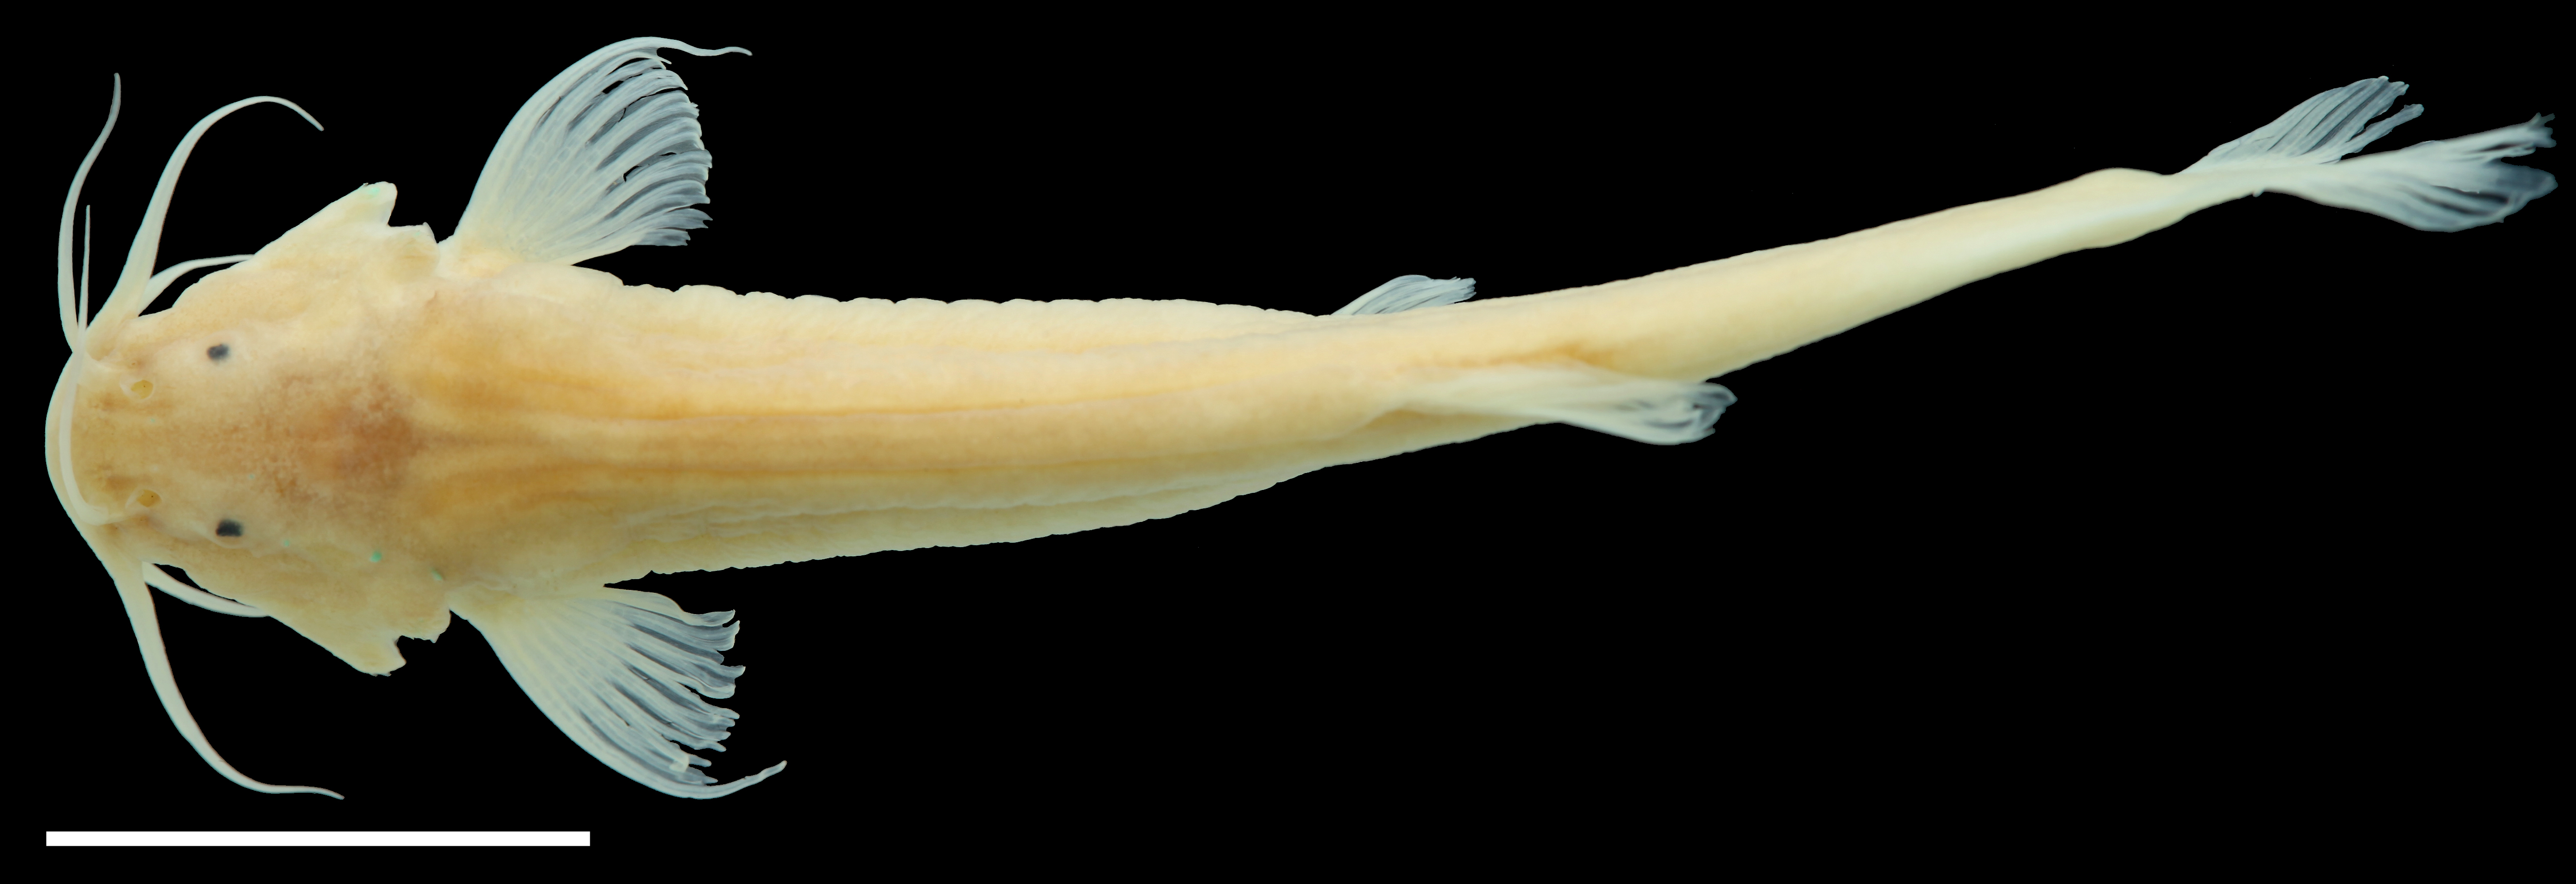 Paratype of <em>Trichomycterus sketi</em>, IAvH-P-11806_Dorsal, 39.4 mm SL (scale bar = 1 cm). Photograph by C. DoNascimiento